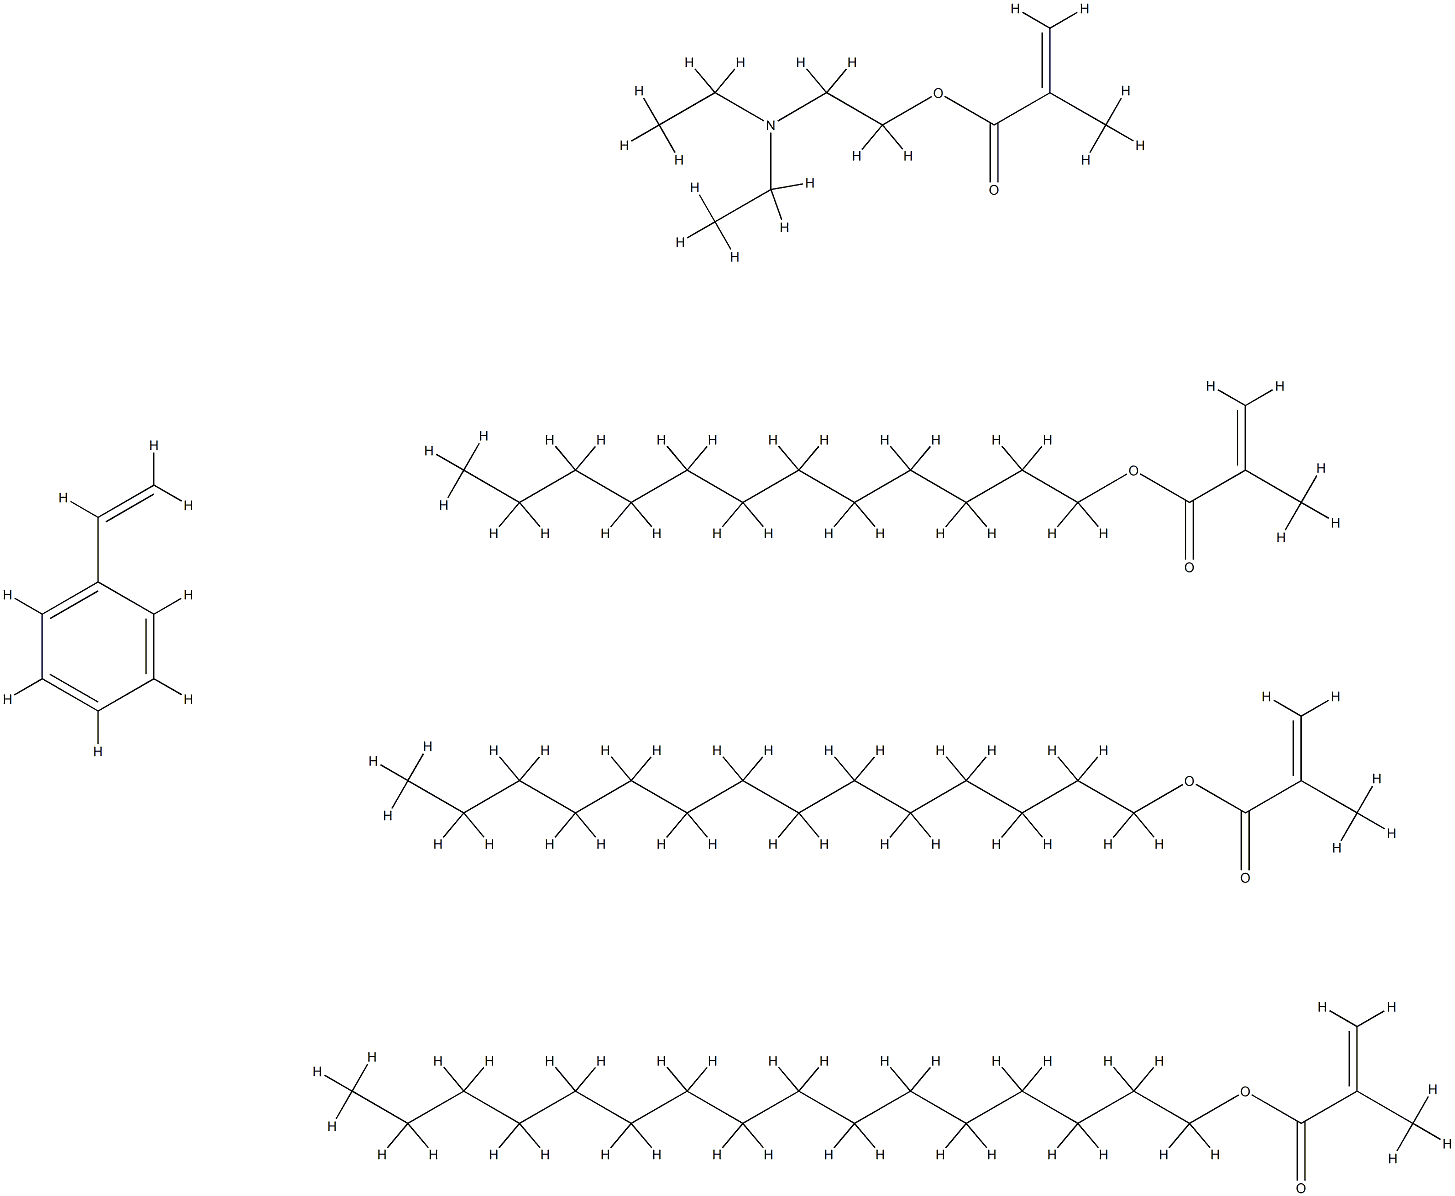 2-Propenoic acid, 2-methyl-, 2-(diethylamino)ethyl ester, polymer with dodecyl 2-methyl-2-propenoate, ethenylbenzene, hexadecyl 2-methyl-2-propenoate and tetradecyl 2-methyl-2-propenoate|